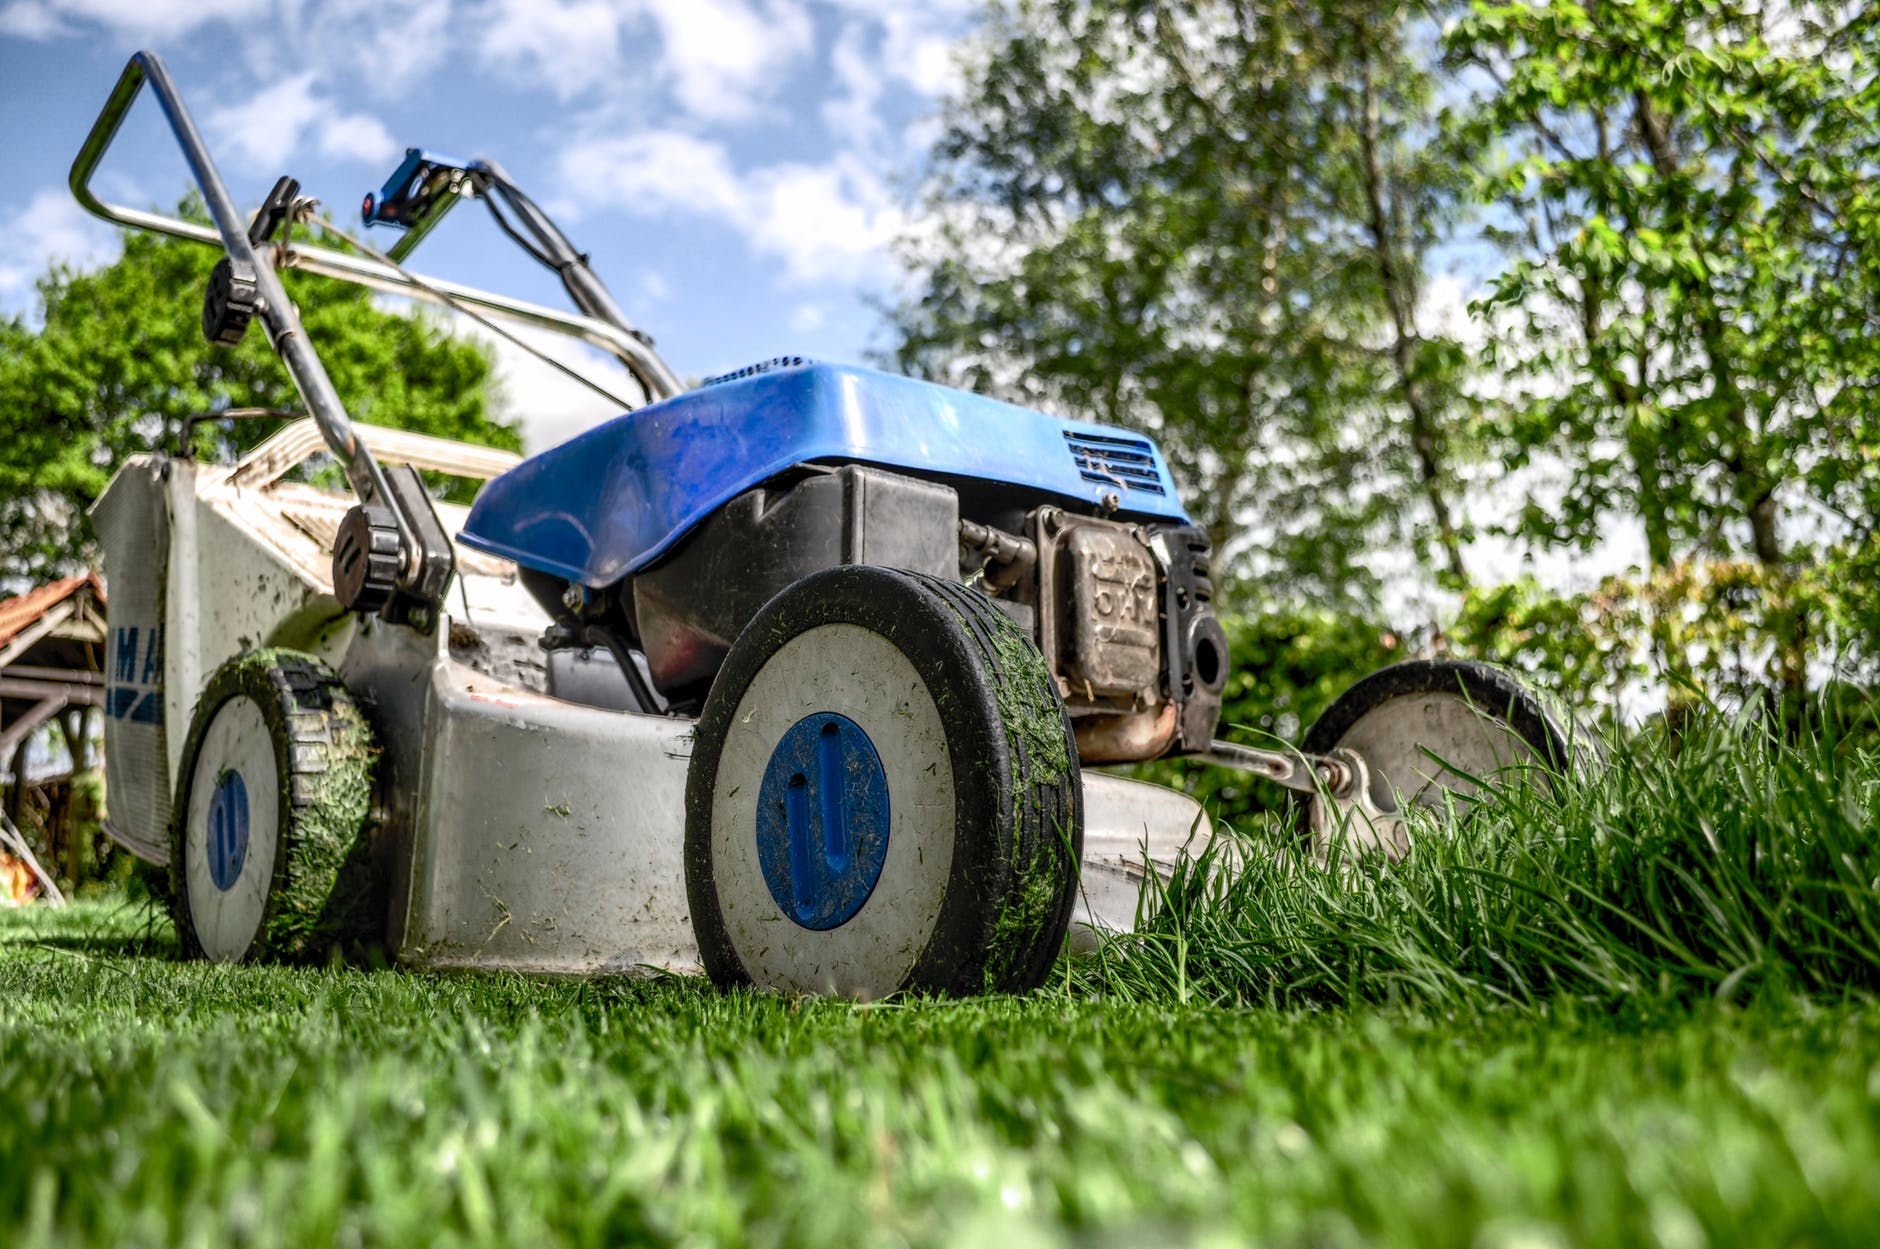 Best Self Propelled Lawn Mower Under $300